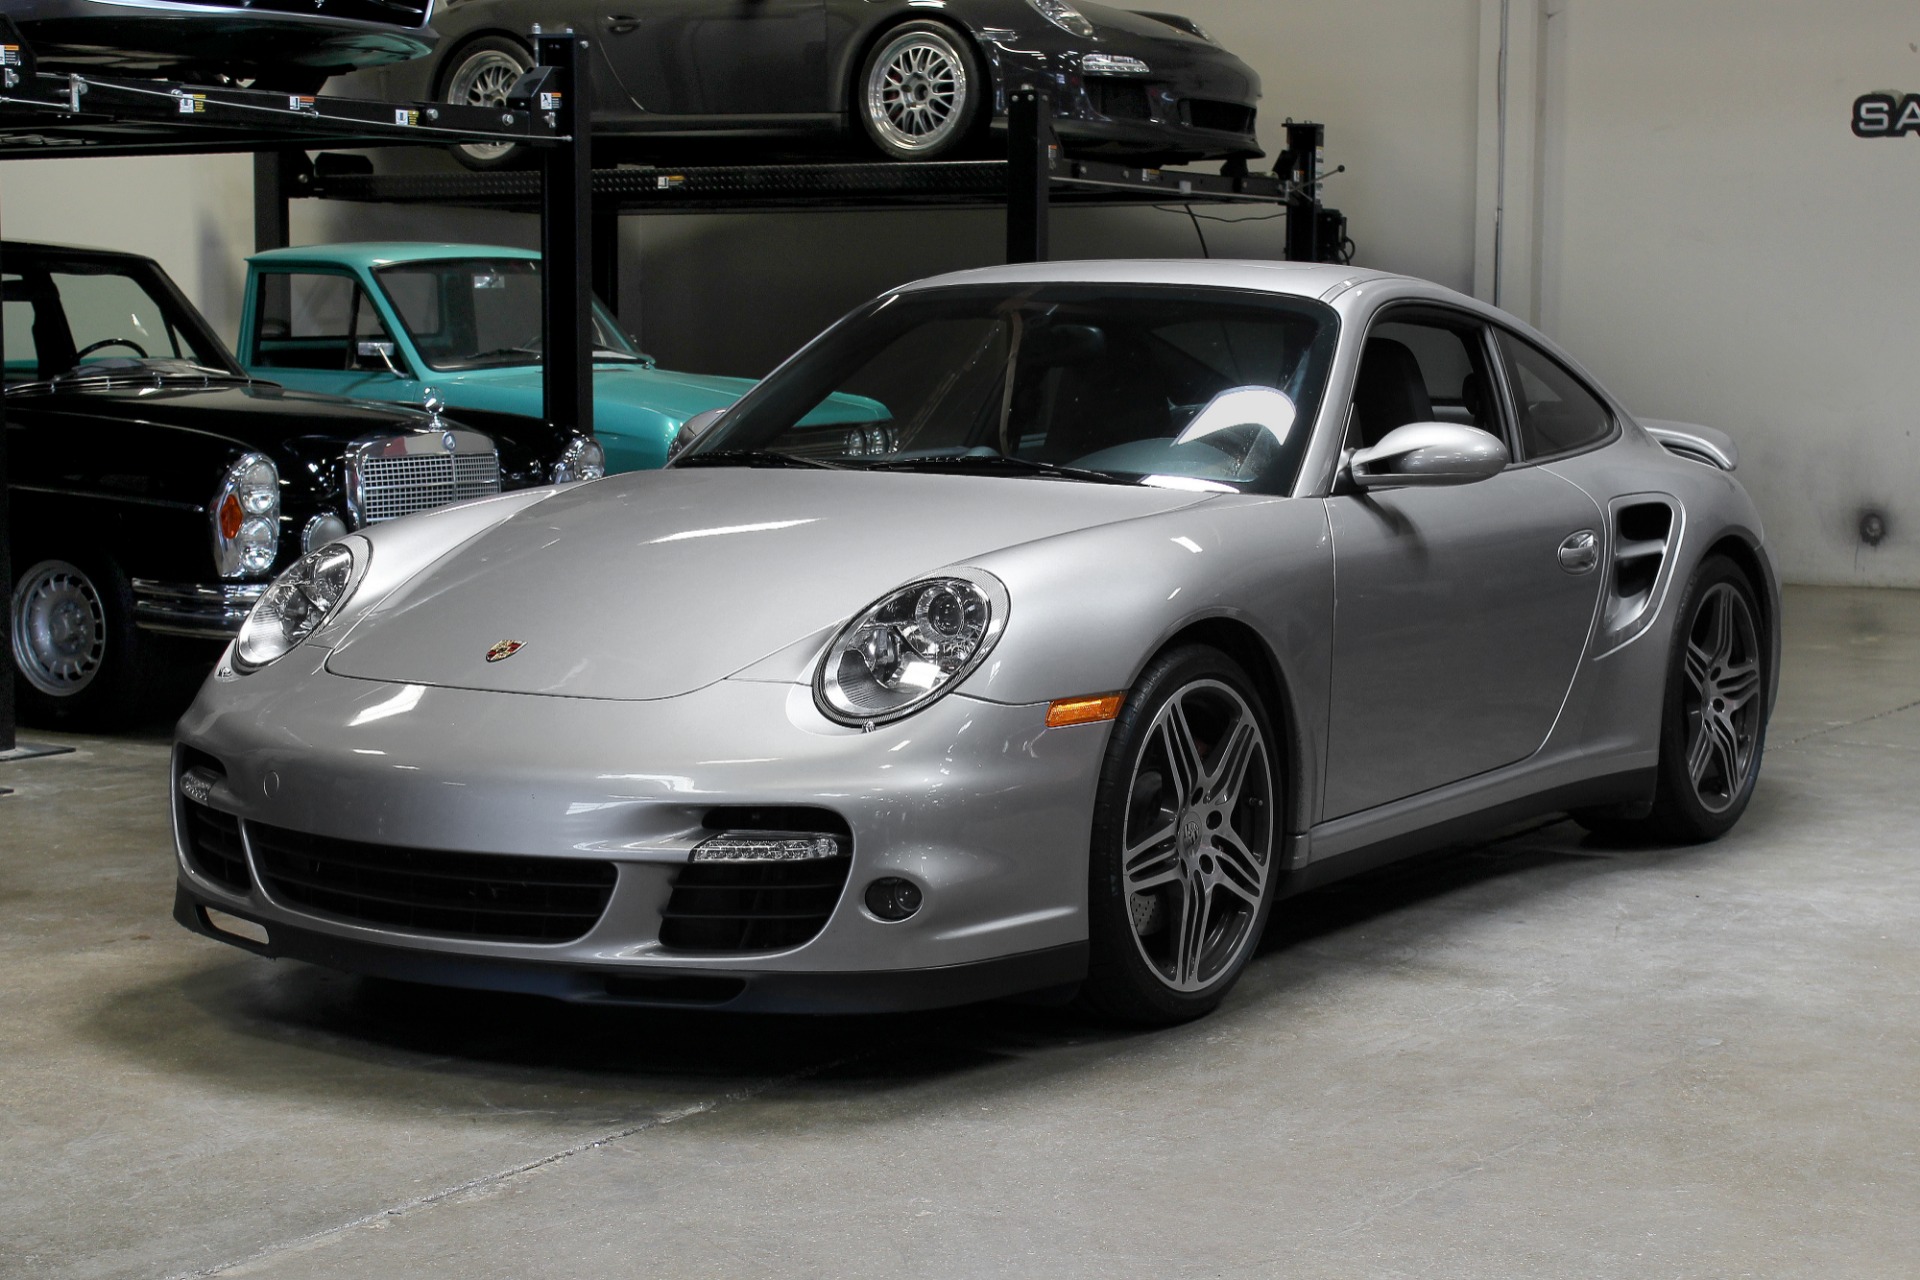 Used 2007 Porsche 911 Turbo Turbo For Sale ($139,995) | San Francisco ...